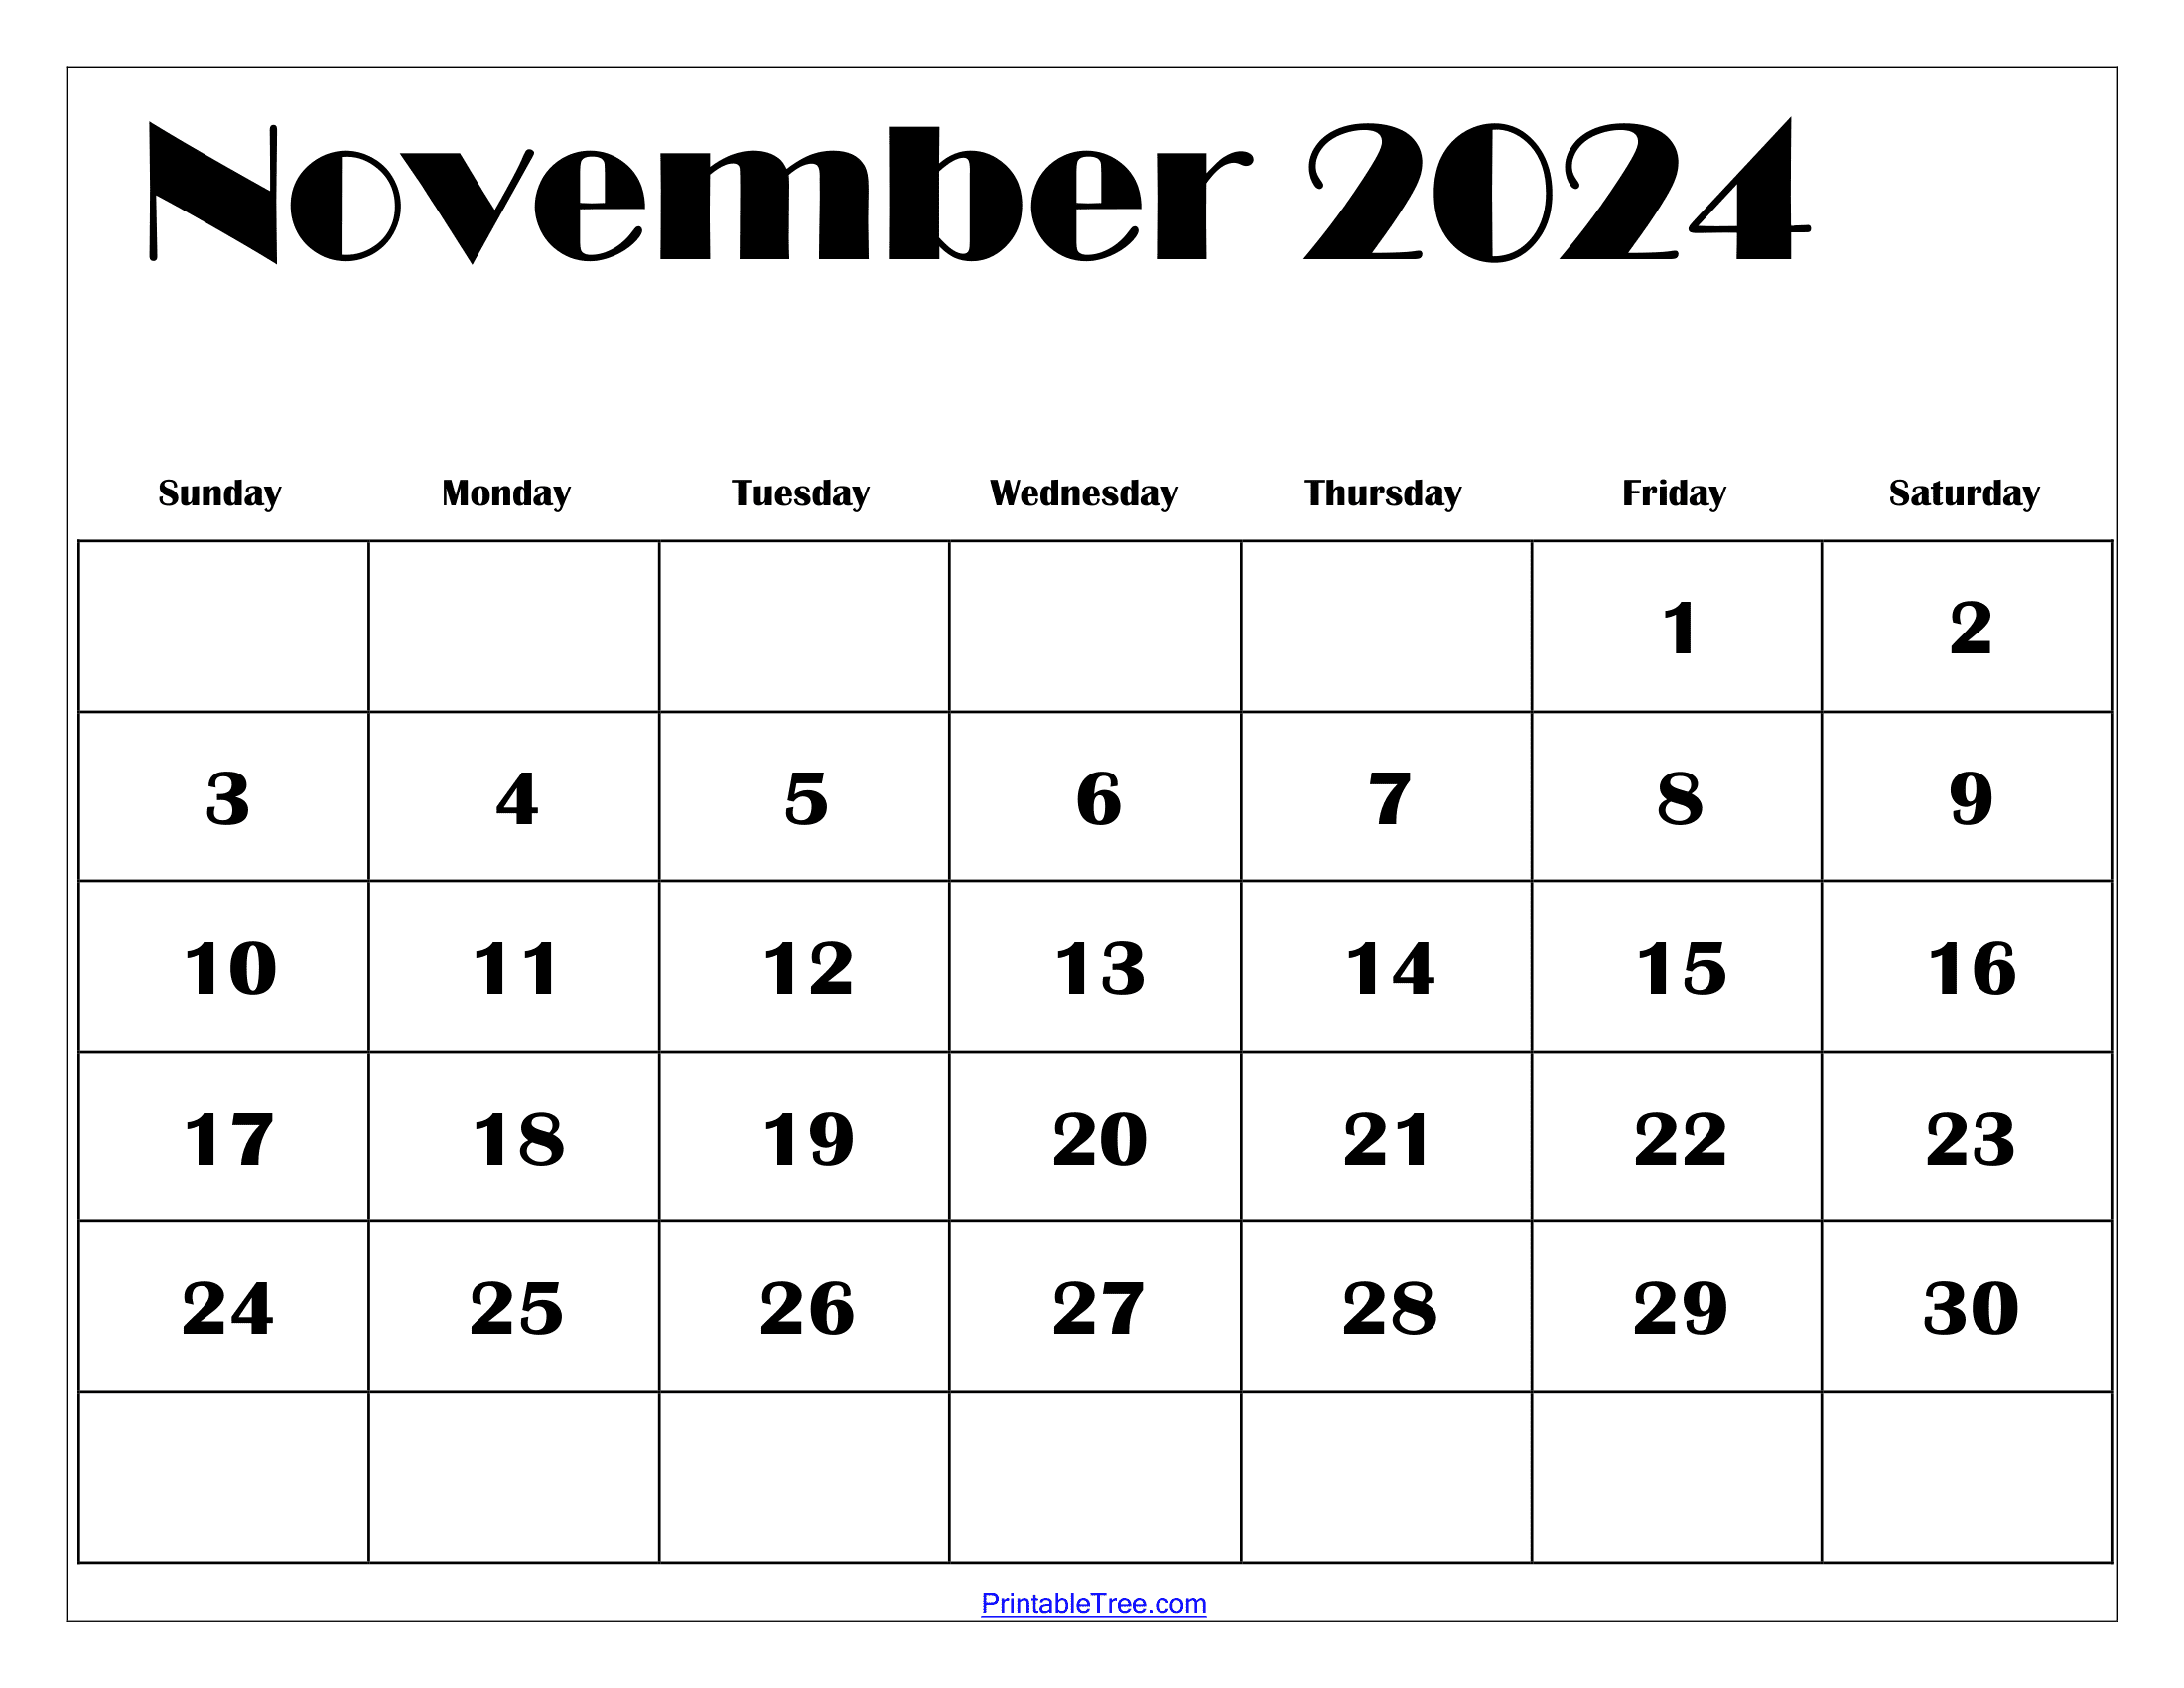 November 2024 Calendar Printable Pdf Template With Holidays for Free Printable November 2024 Calendar